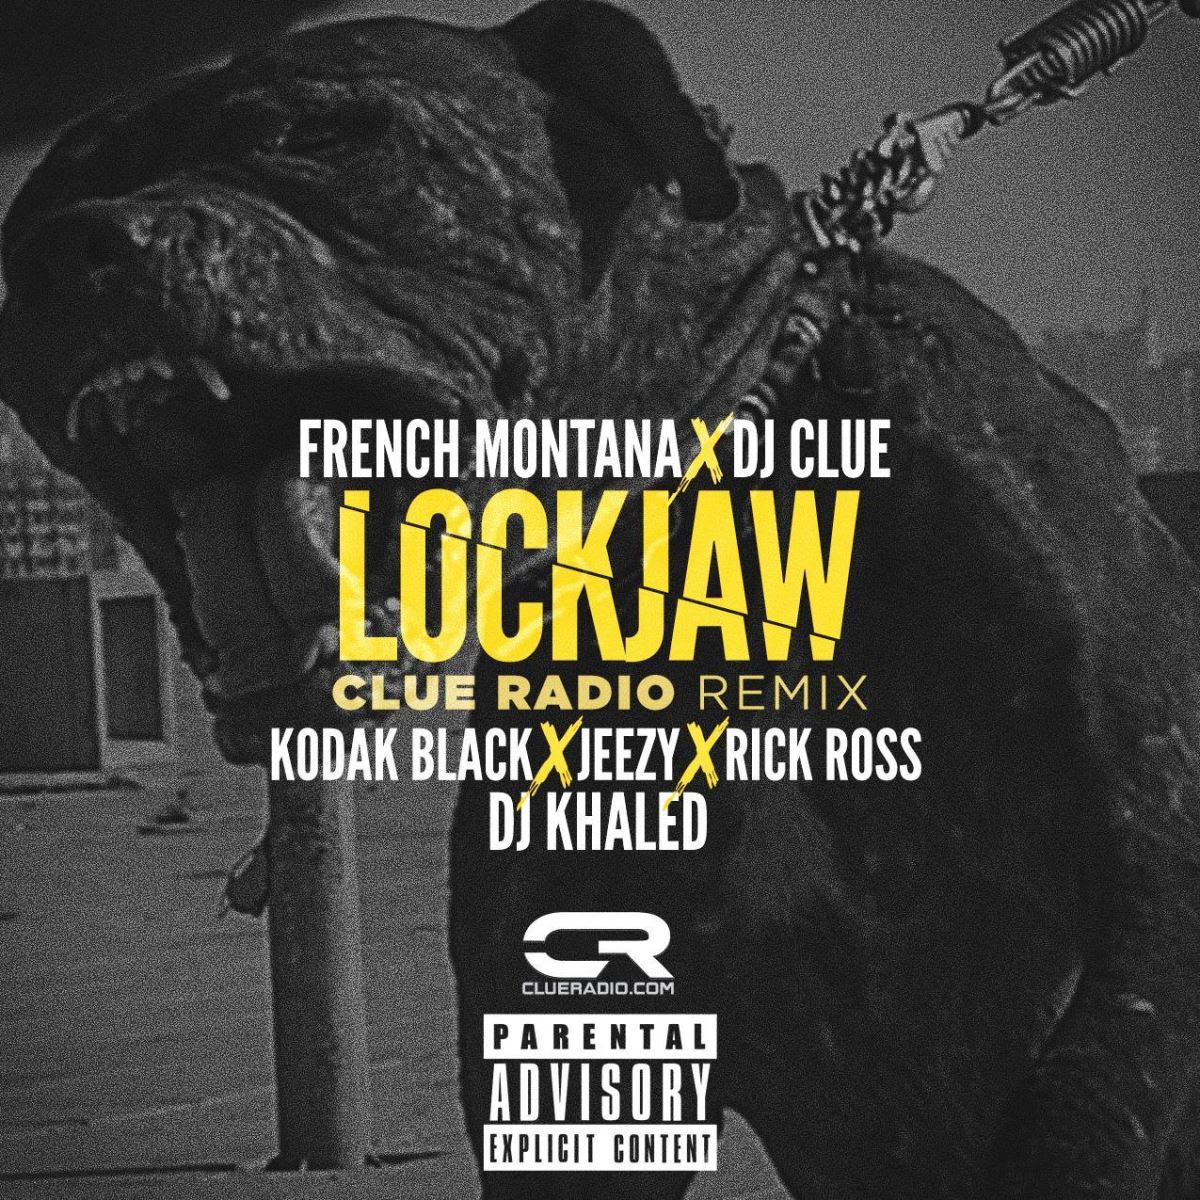 New Music: French Montana – “Lockjaw” (Remix) Feat. Kodak Black, Jeezy, Rick Ross & DJ Khaled [LISTEN]